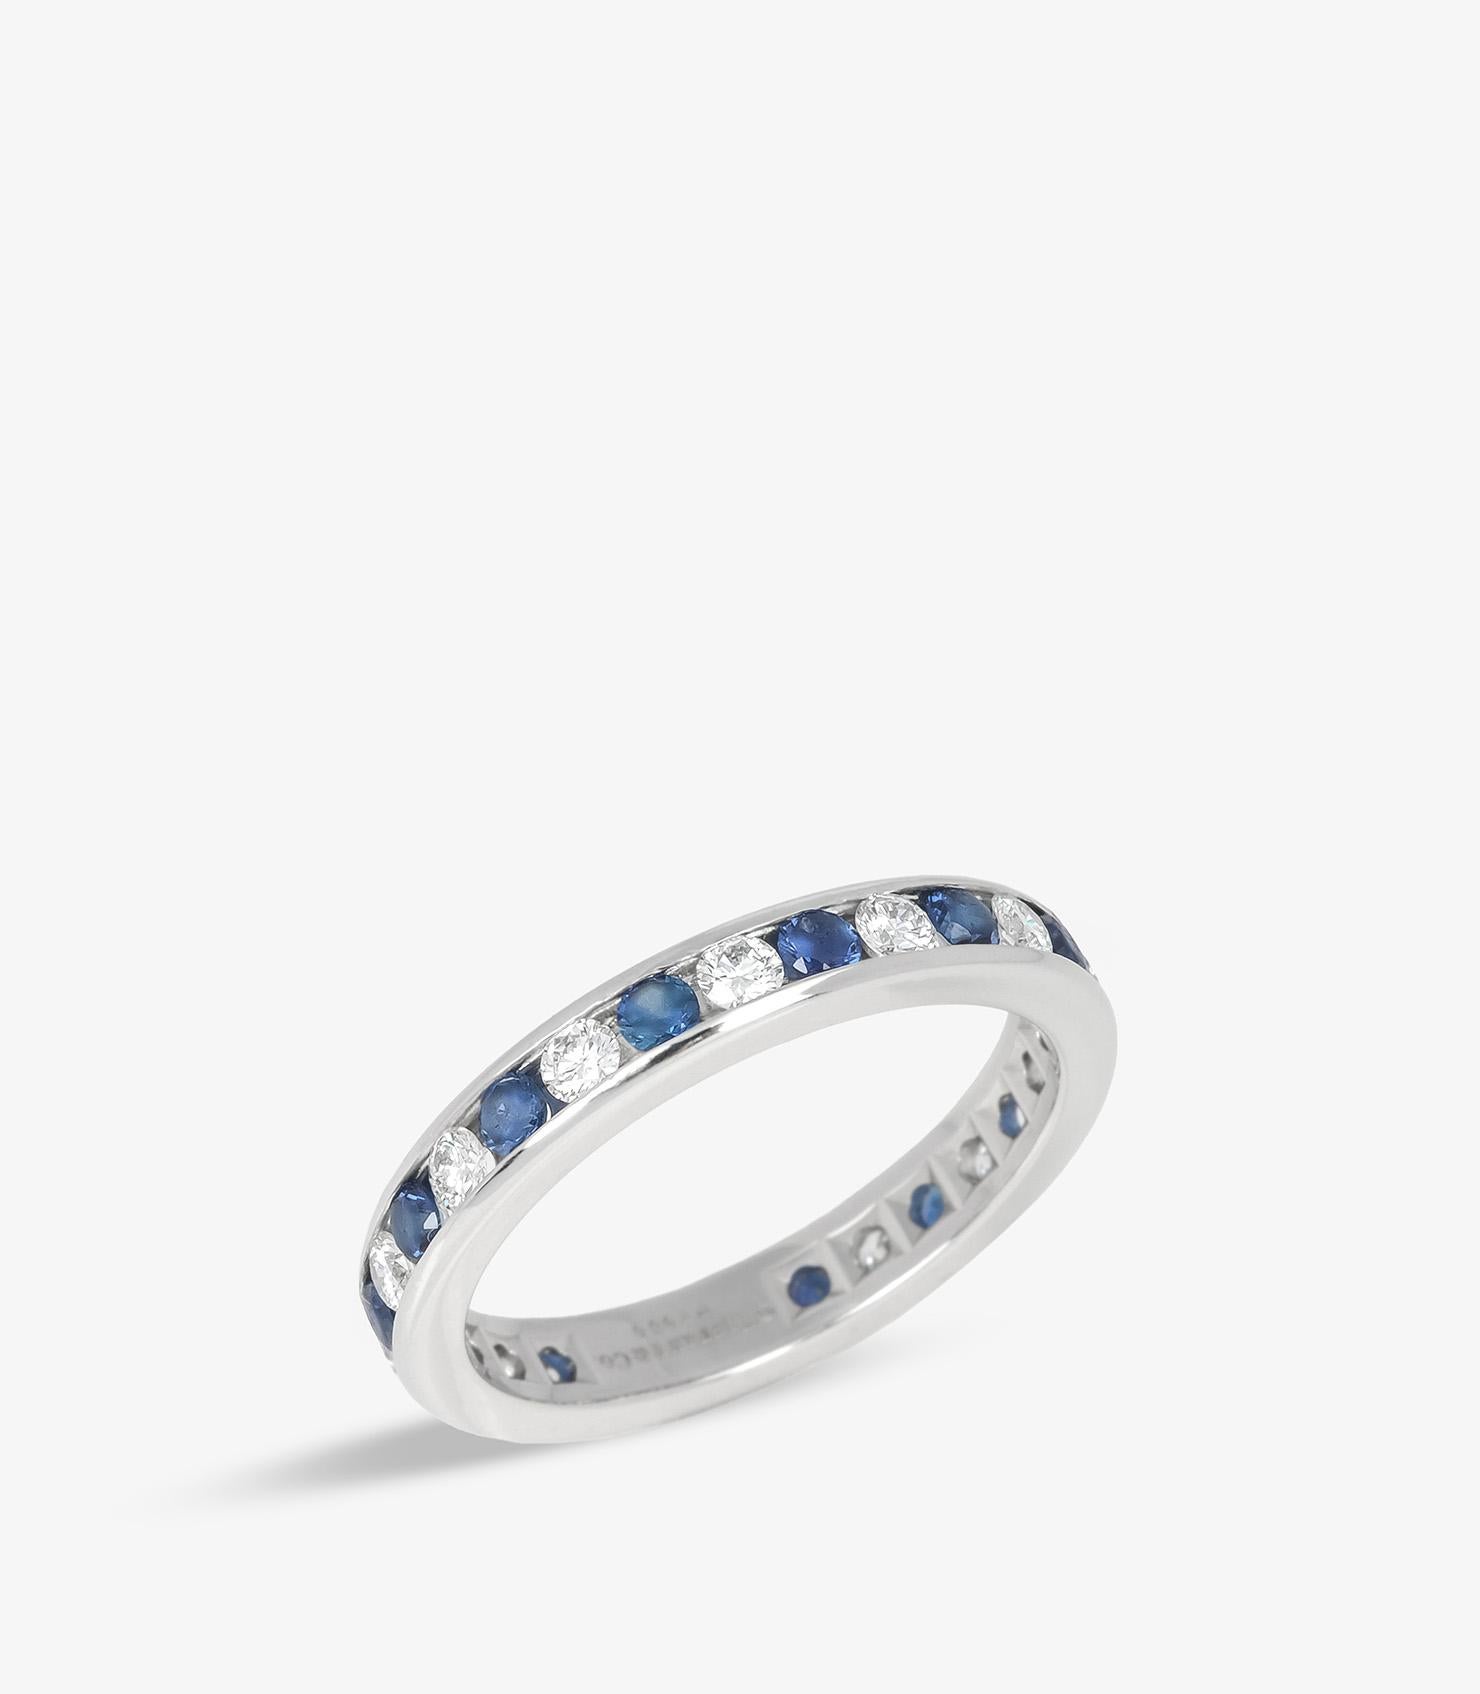 Tiffany & Co. Brilliant Cut Sapphire And Diamond Platinum Full Eternity Ring

Brand- Tiffany & Co.
Model- Full Eternity Ring
Product Type- Ring
Accompanied By- Tiffany & Co. Box
Material(s)- Platinum
Gemstone- Diamond
Secondary Gemstone- Sapphire
UK